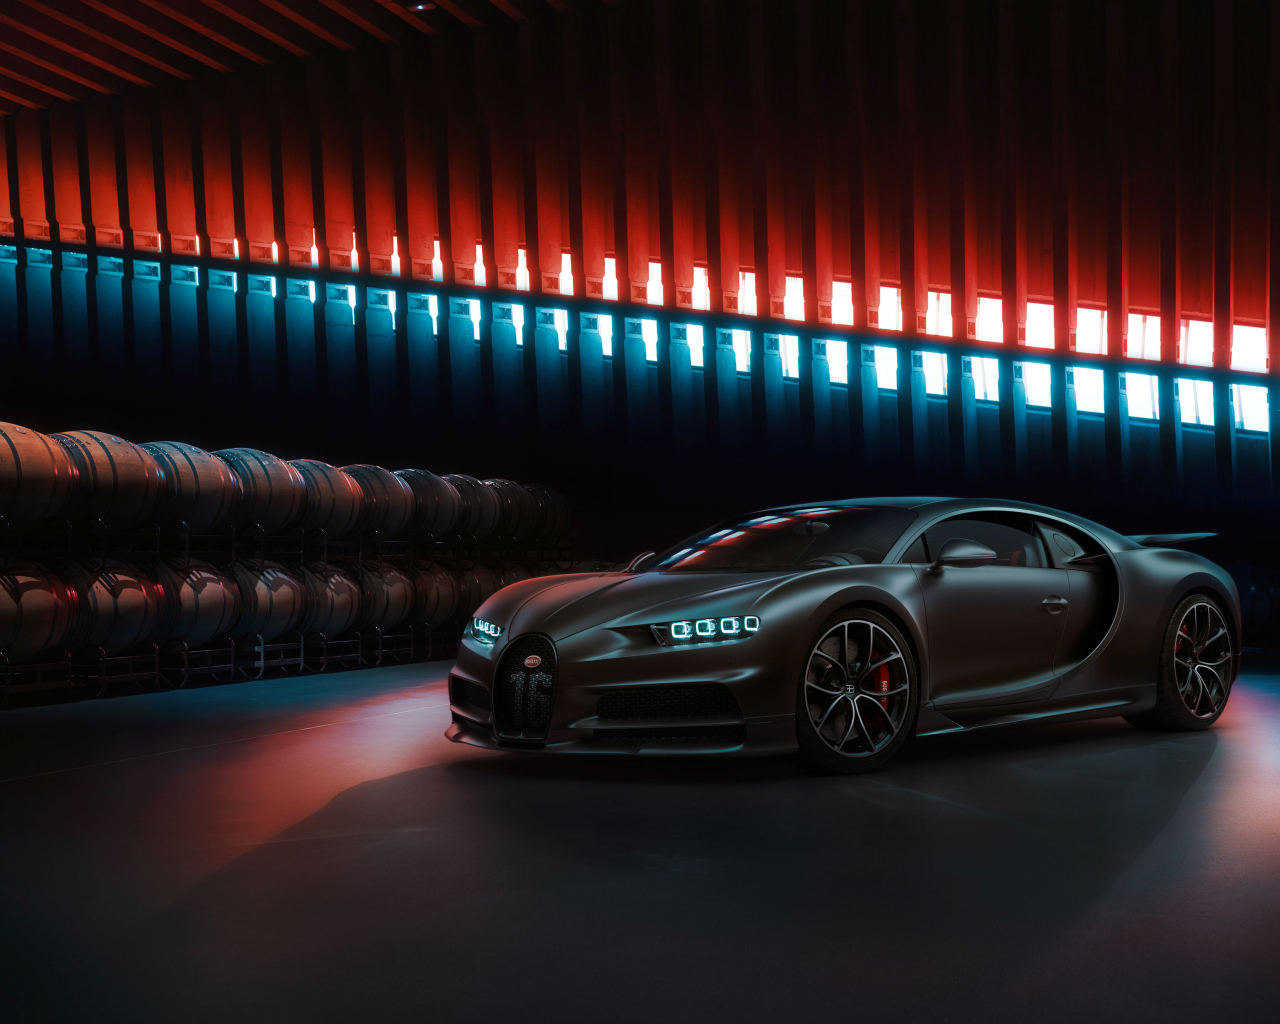 Download 1280x1024 Wallpaper Black Bugatti Chiron, Black Car, Standard 5: Fullscreen, 1280x1024 HD Image, Background, 34140